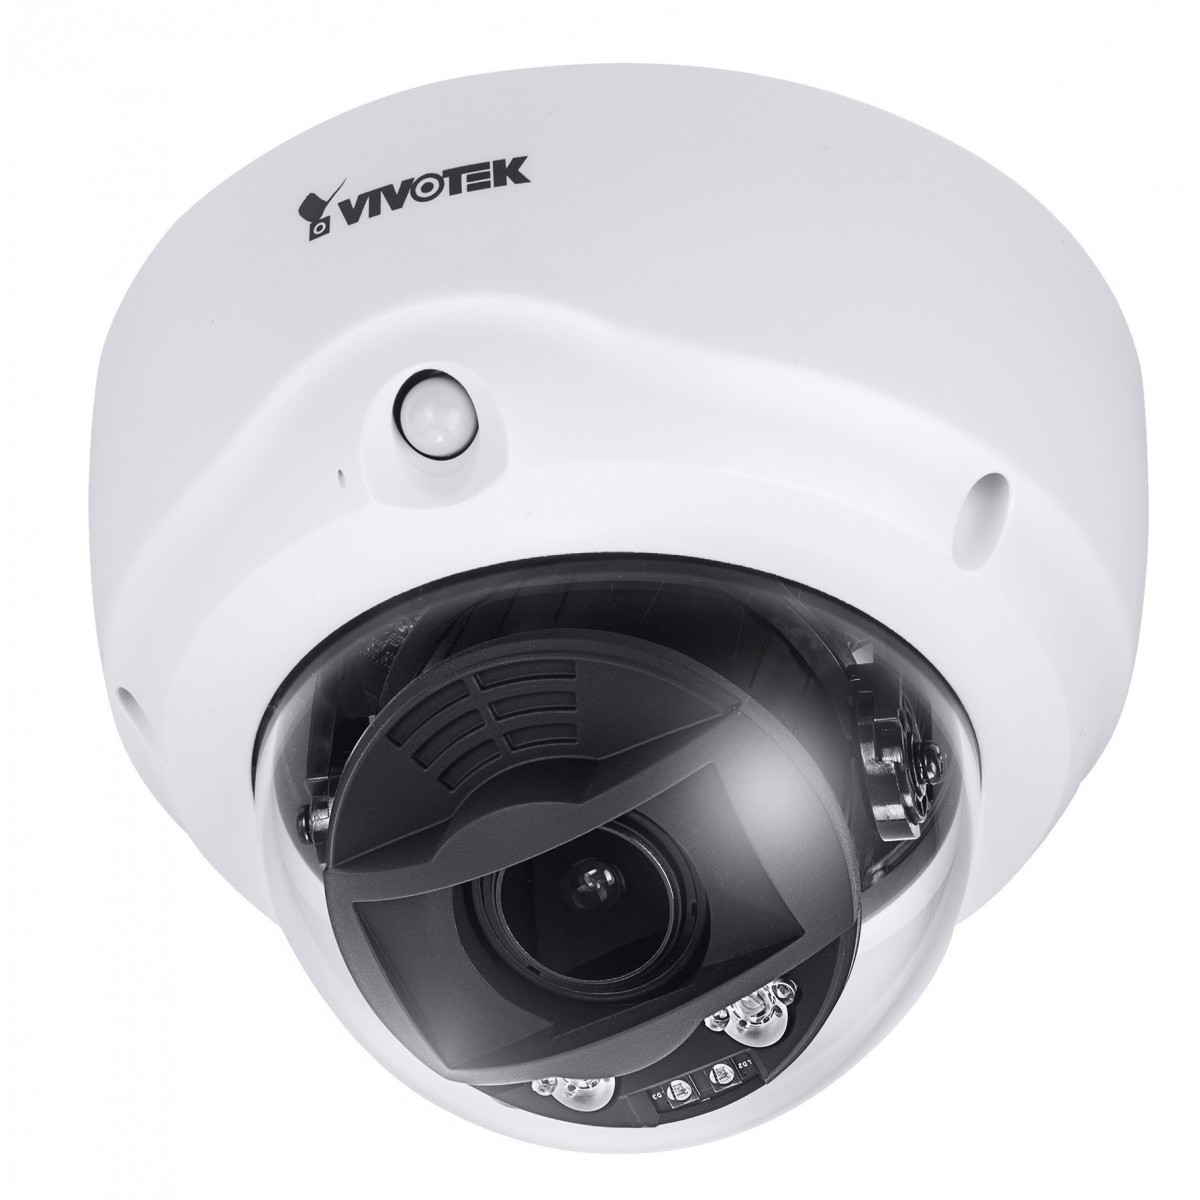 VIVOTEK FD9165-HT - IP security camera - Indoor - Wired - CE - LVD - FCC Class A - VCCI - C-Tick - UL - Dome - Ceiling